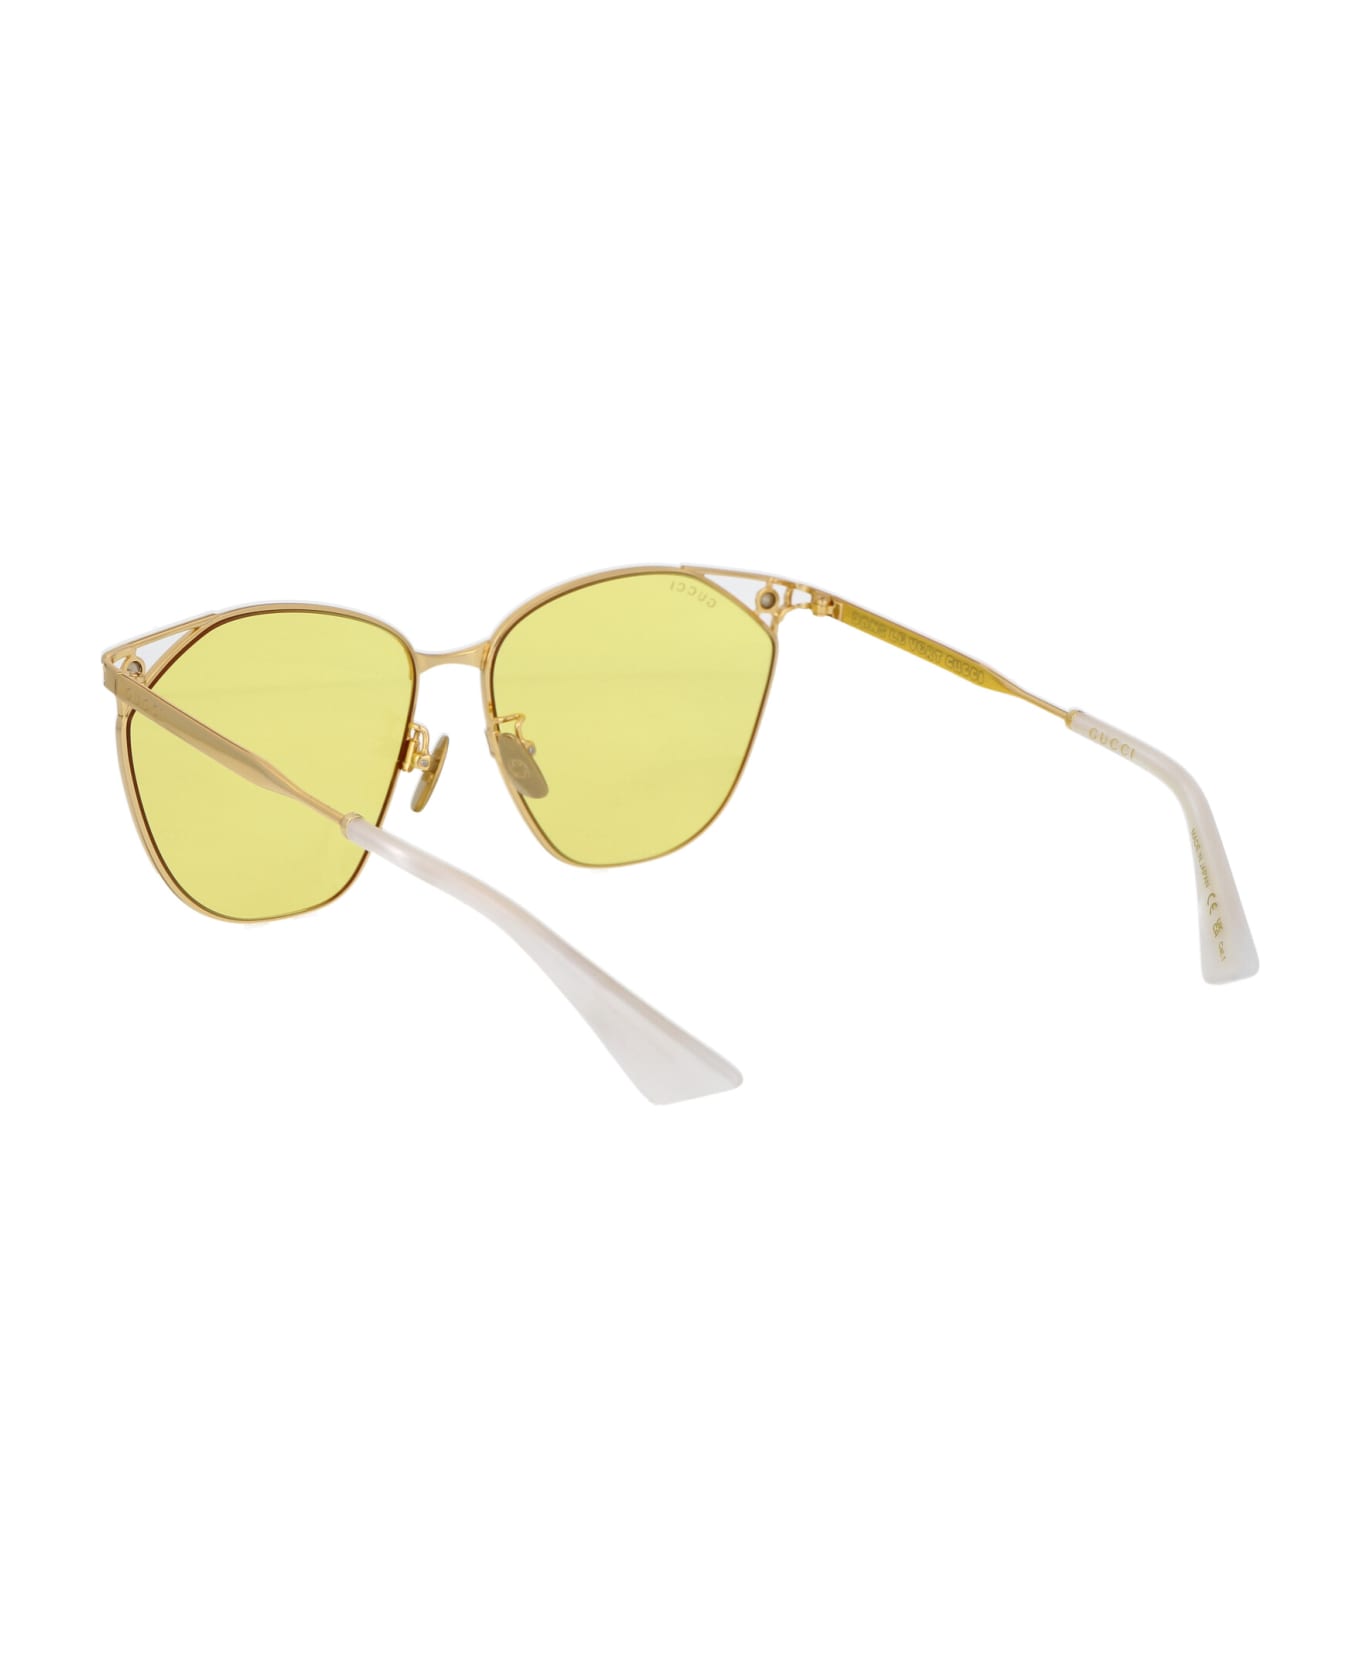 Gucci Eyewear Gg1375sa Sunglasses - 002 GOLD GOLD YELLOW サングラス